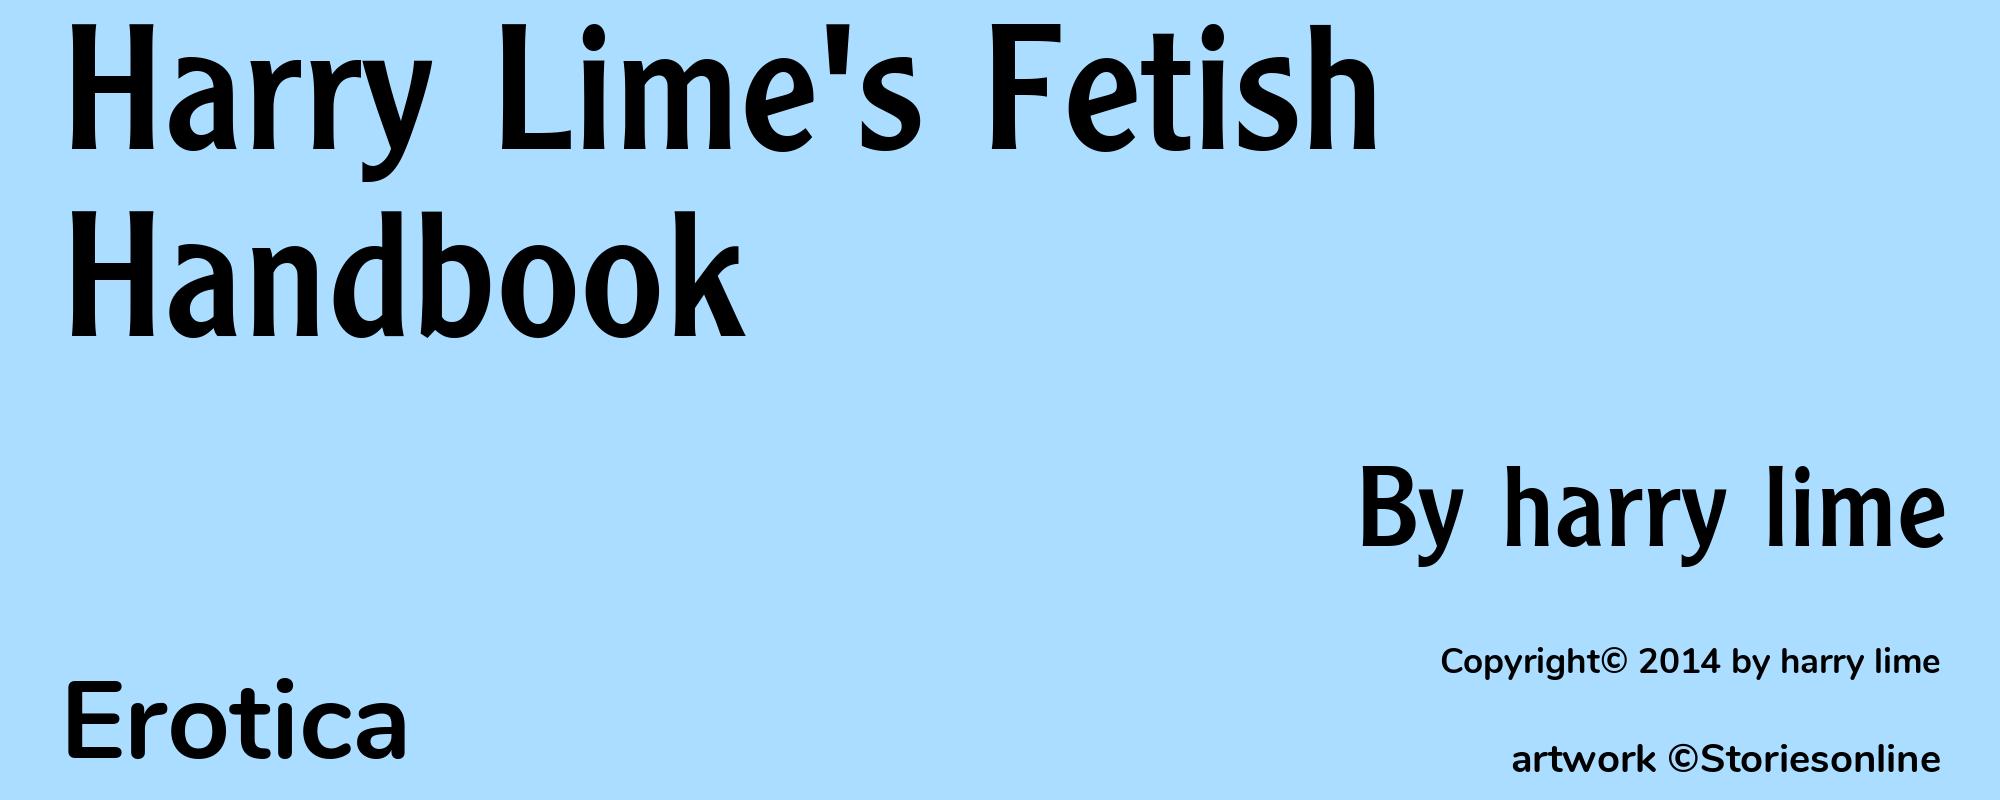 Harry Lime's Fetish Handbook - Cover